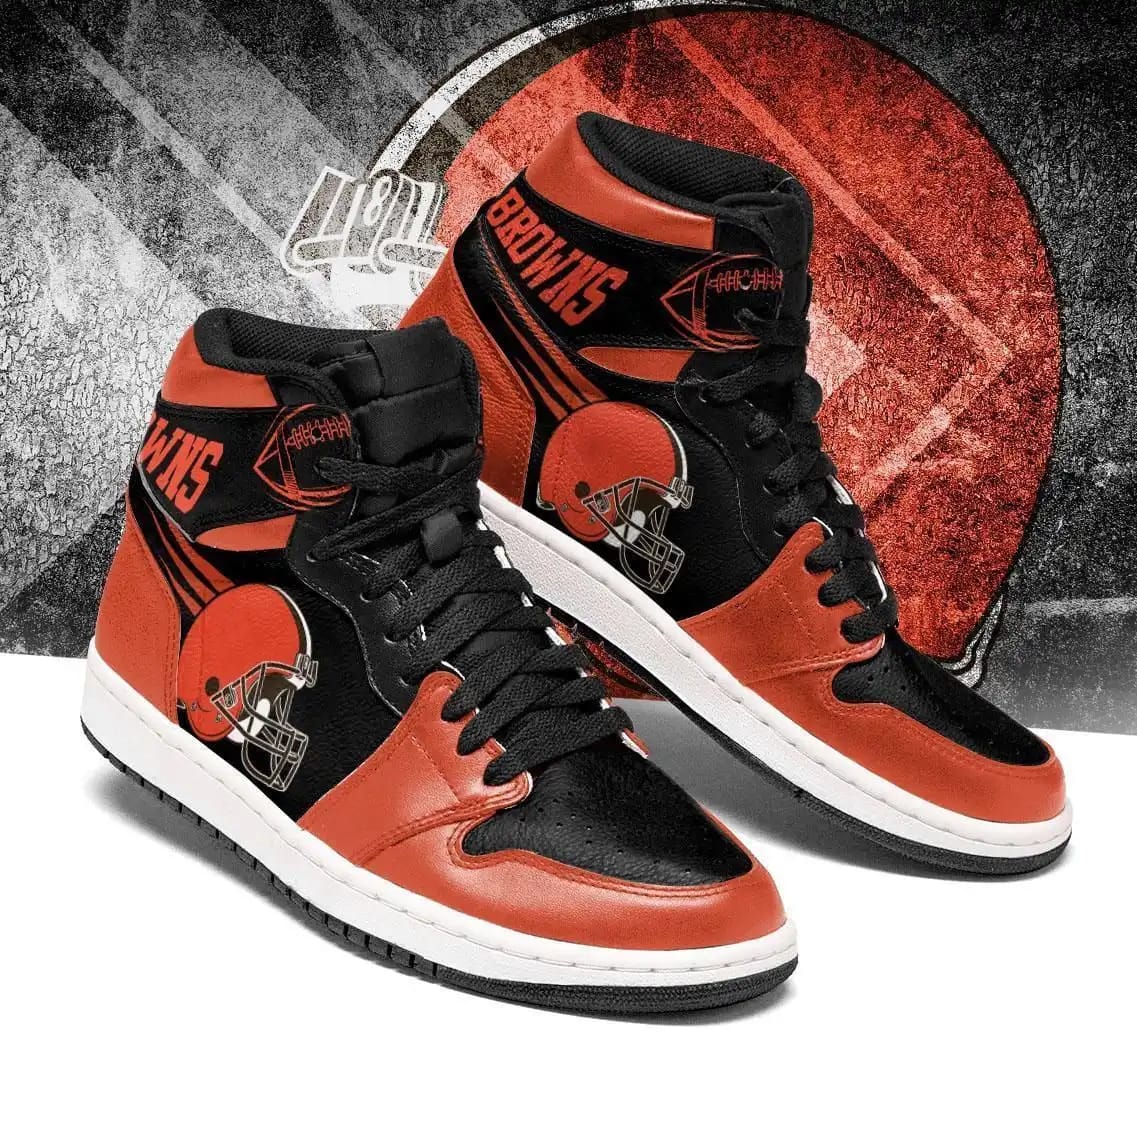 Cleveland Browns Sneakers Nfl Football Team Air Jordan Shoes